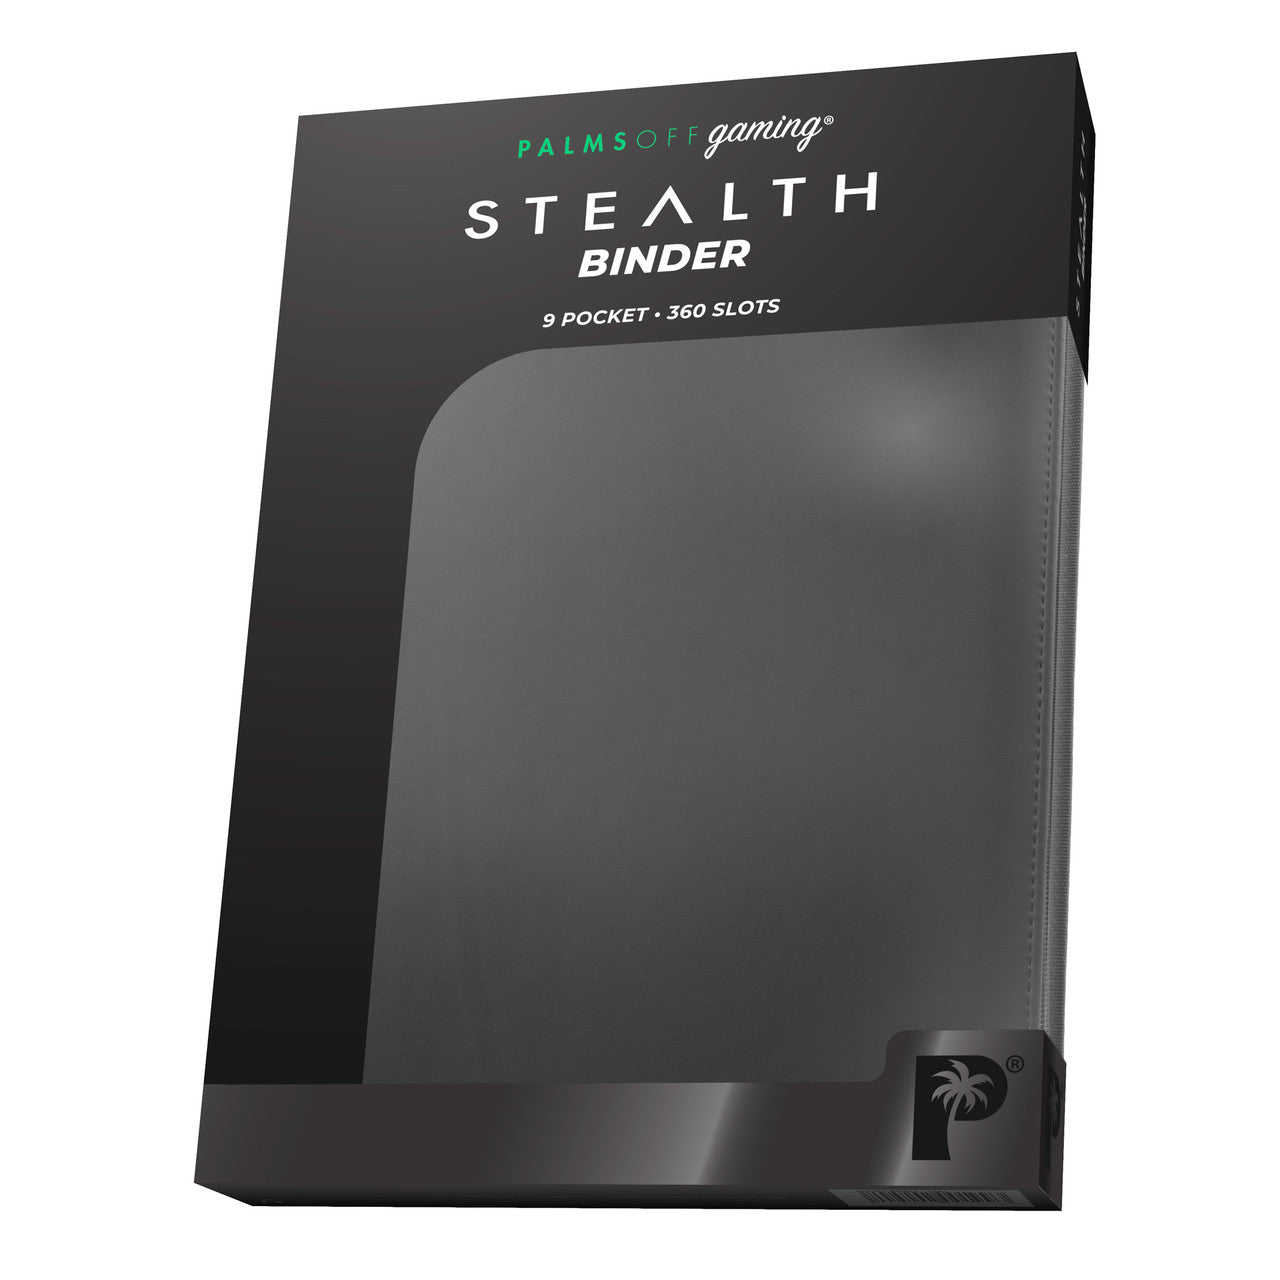 Palms Off Gaming STEALTH 9 Pocket Zip Trading Card Binder - Black